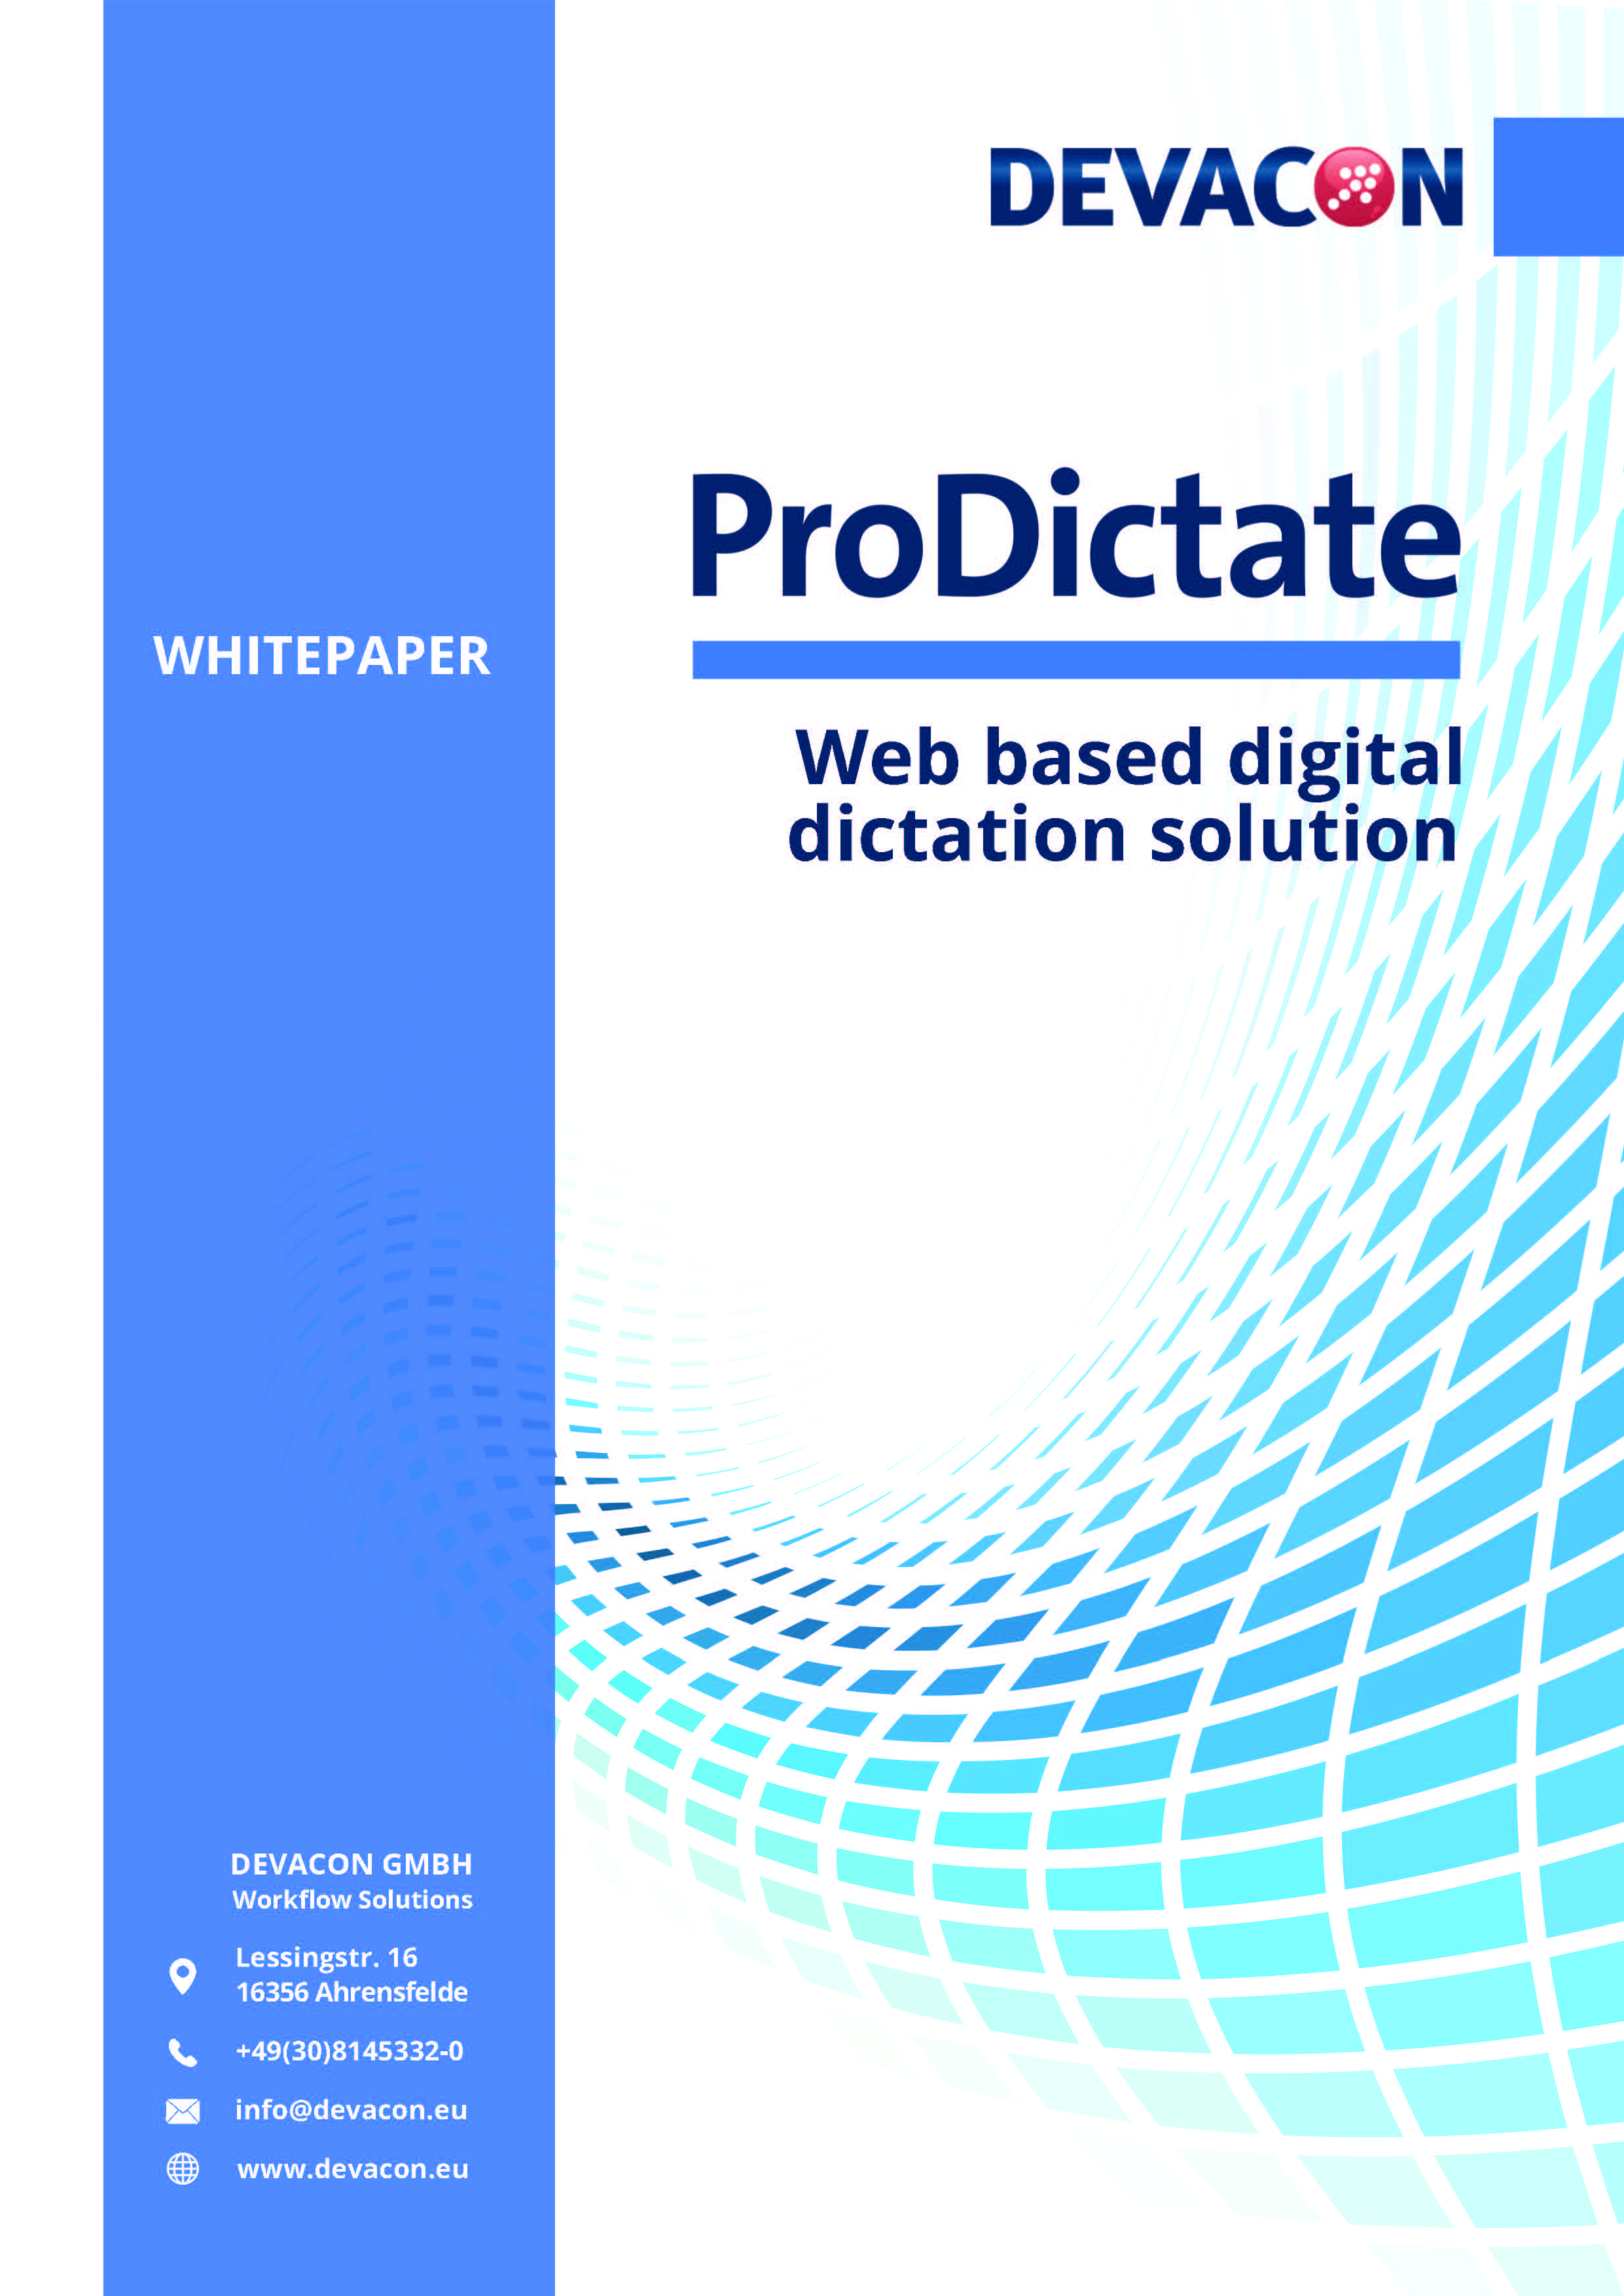 Web based digital dictation